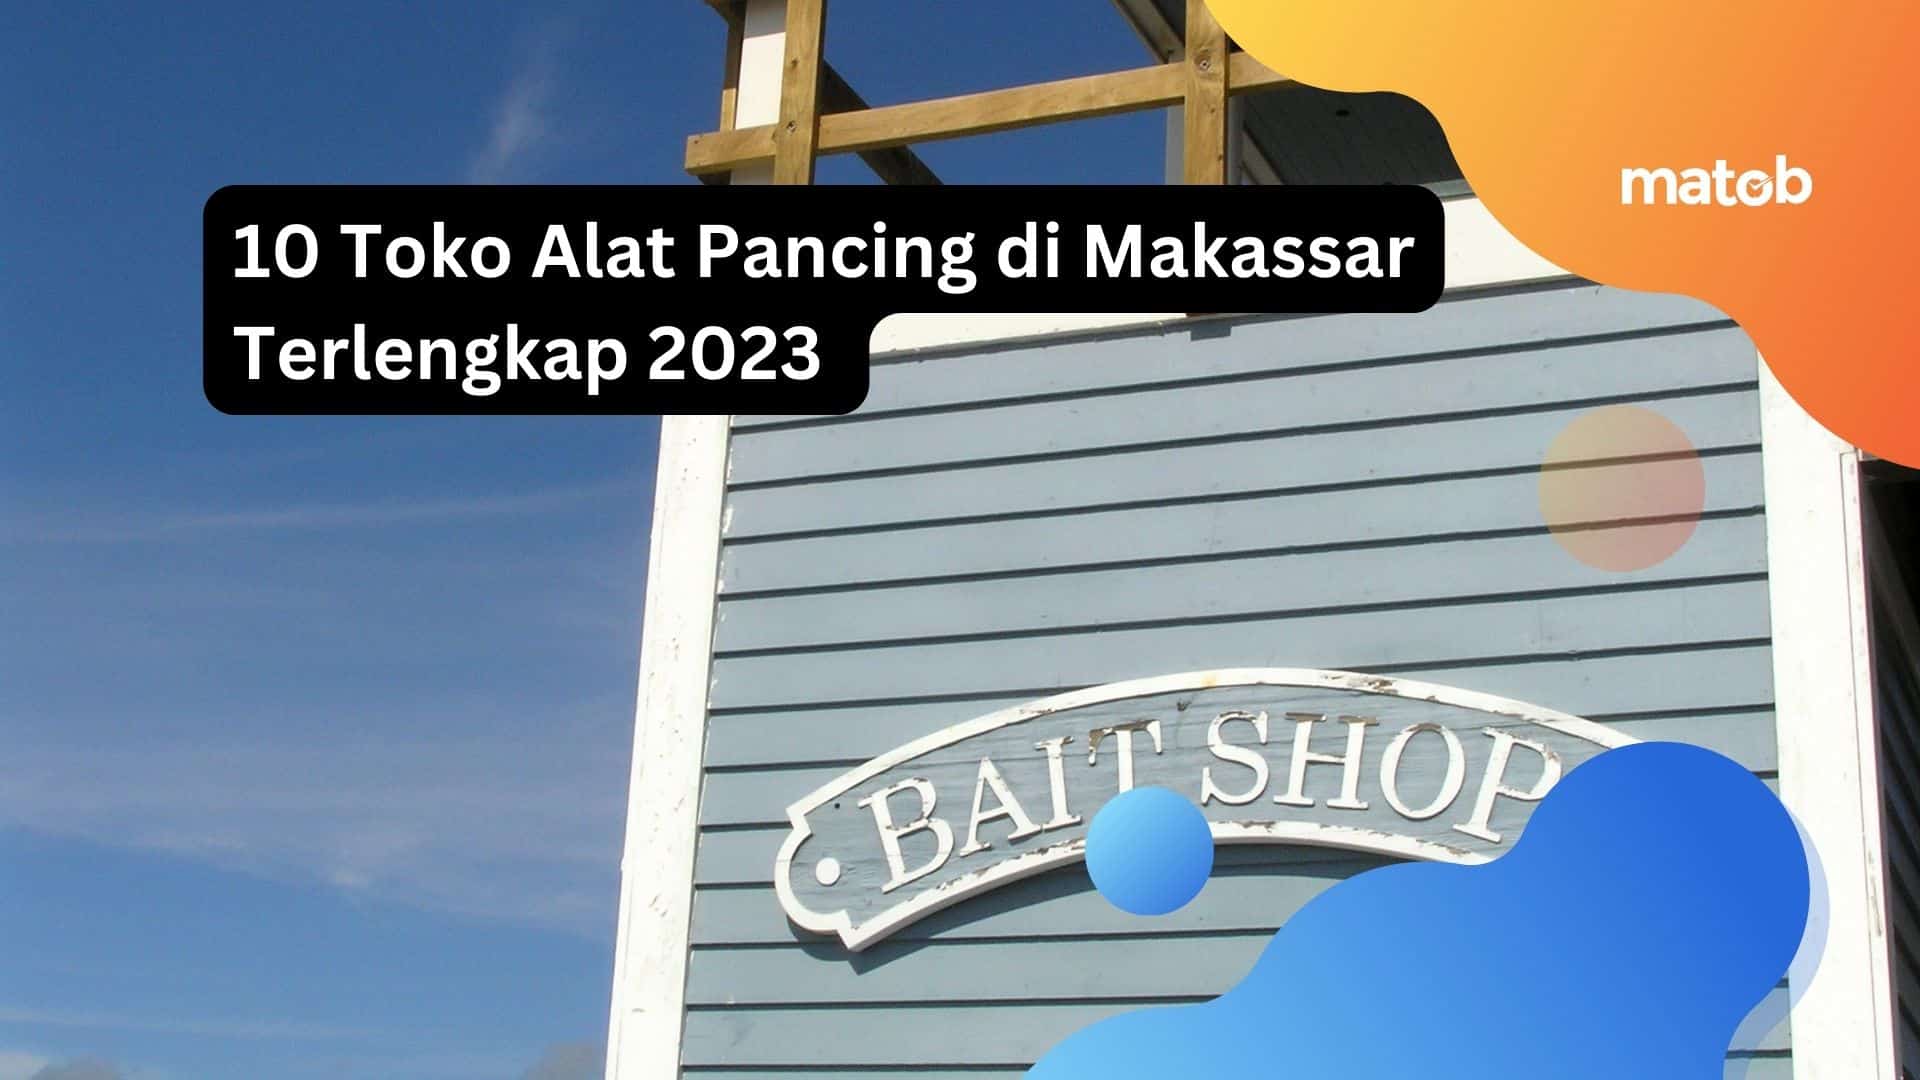 10 Toko Alat Pancing di Makassar Terlengkap 2023